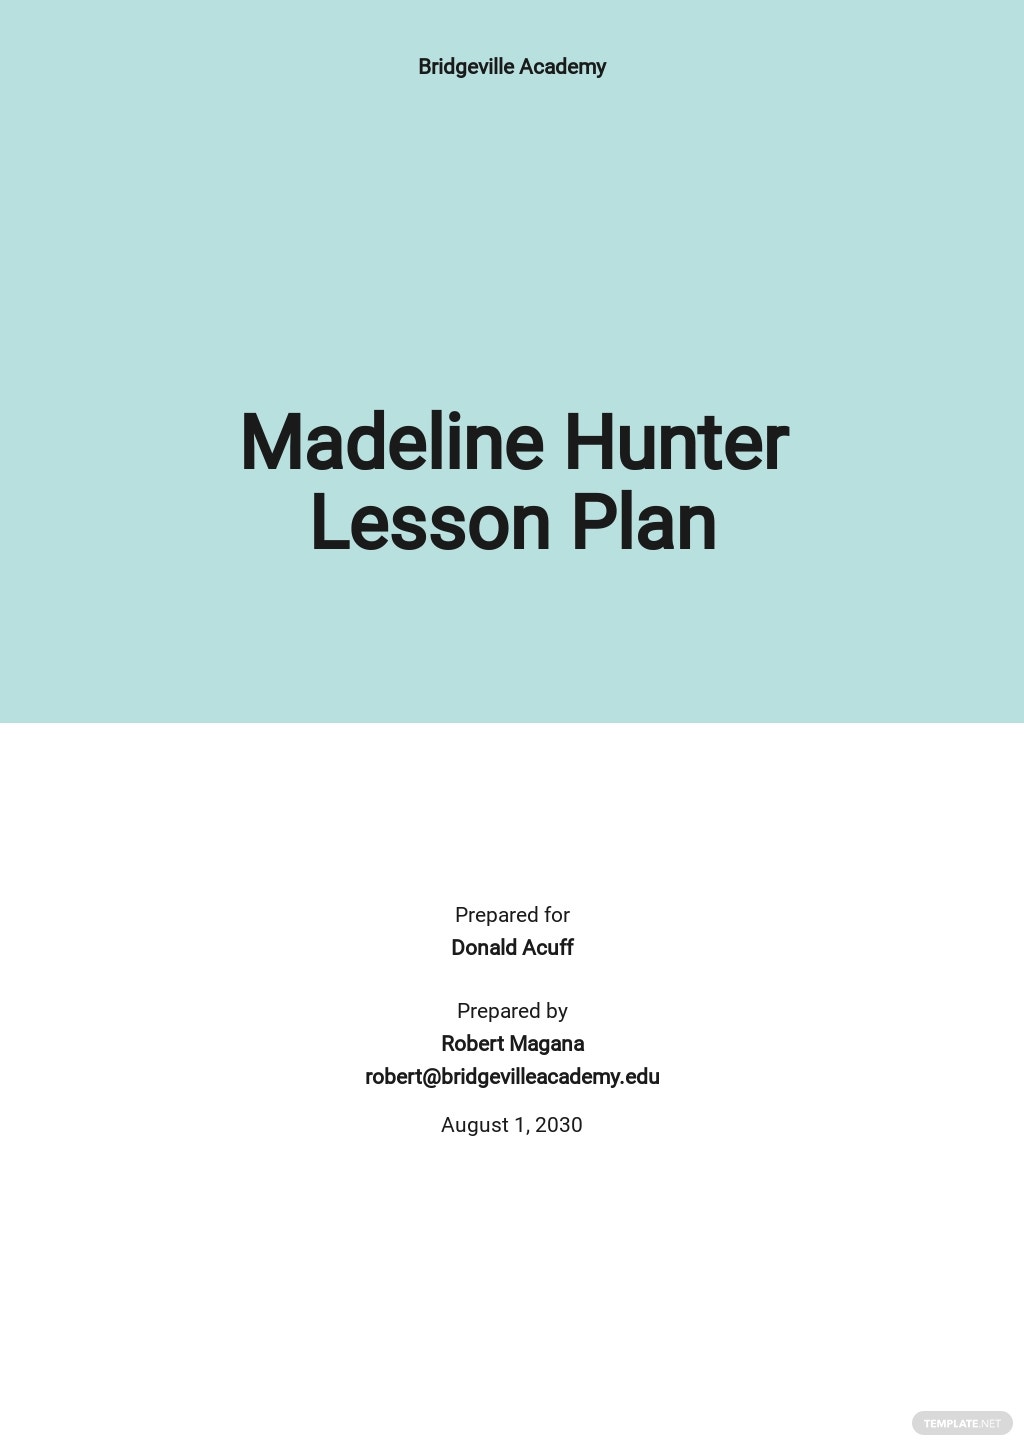 blank madeline hunter lesson plan template